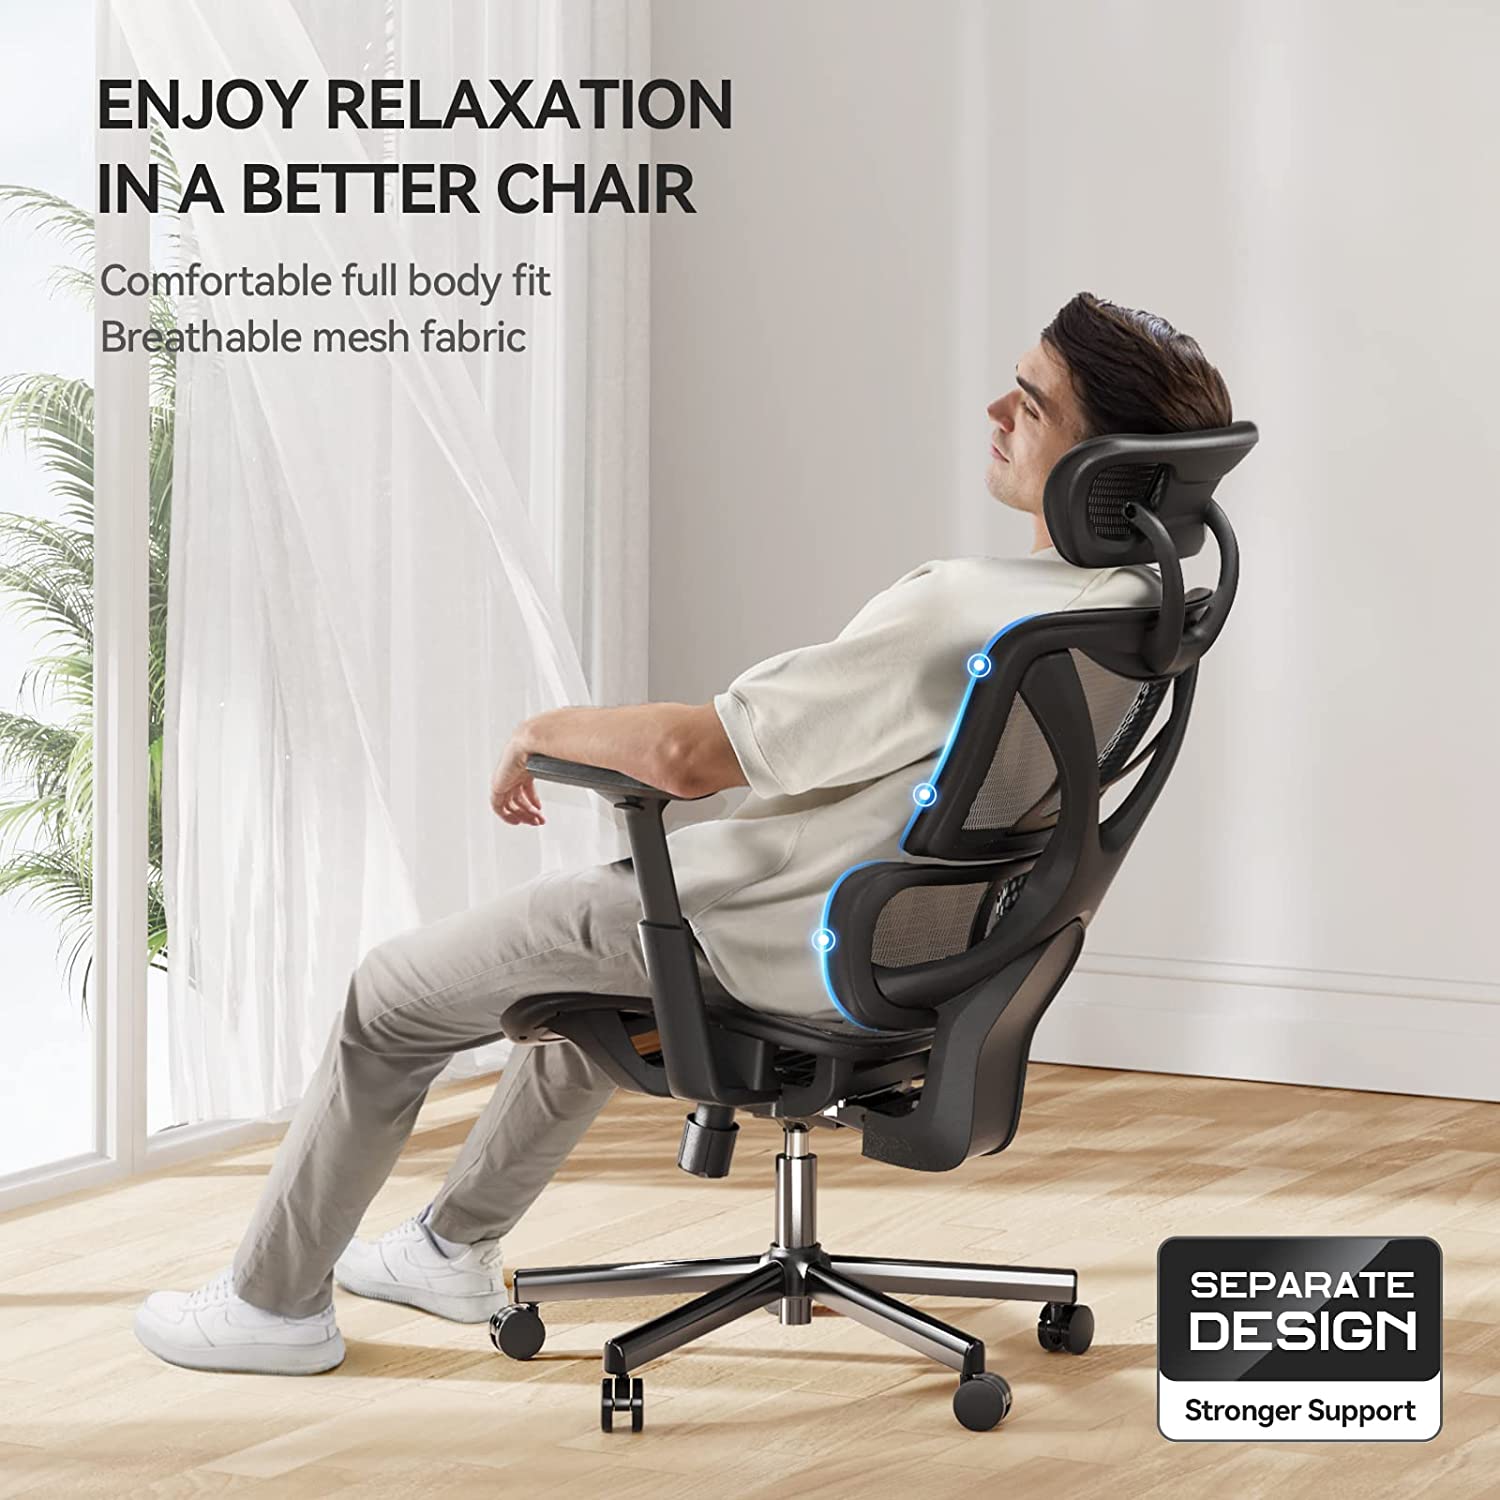 Wellnewlife Prestige Ergonomic Office Chair with Full Body